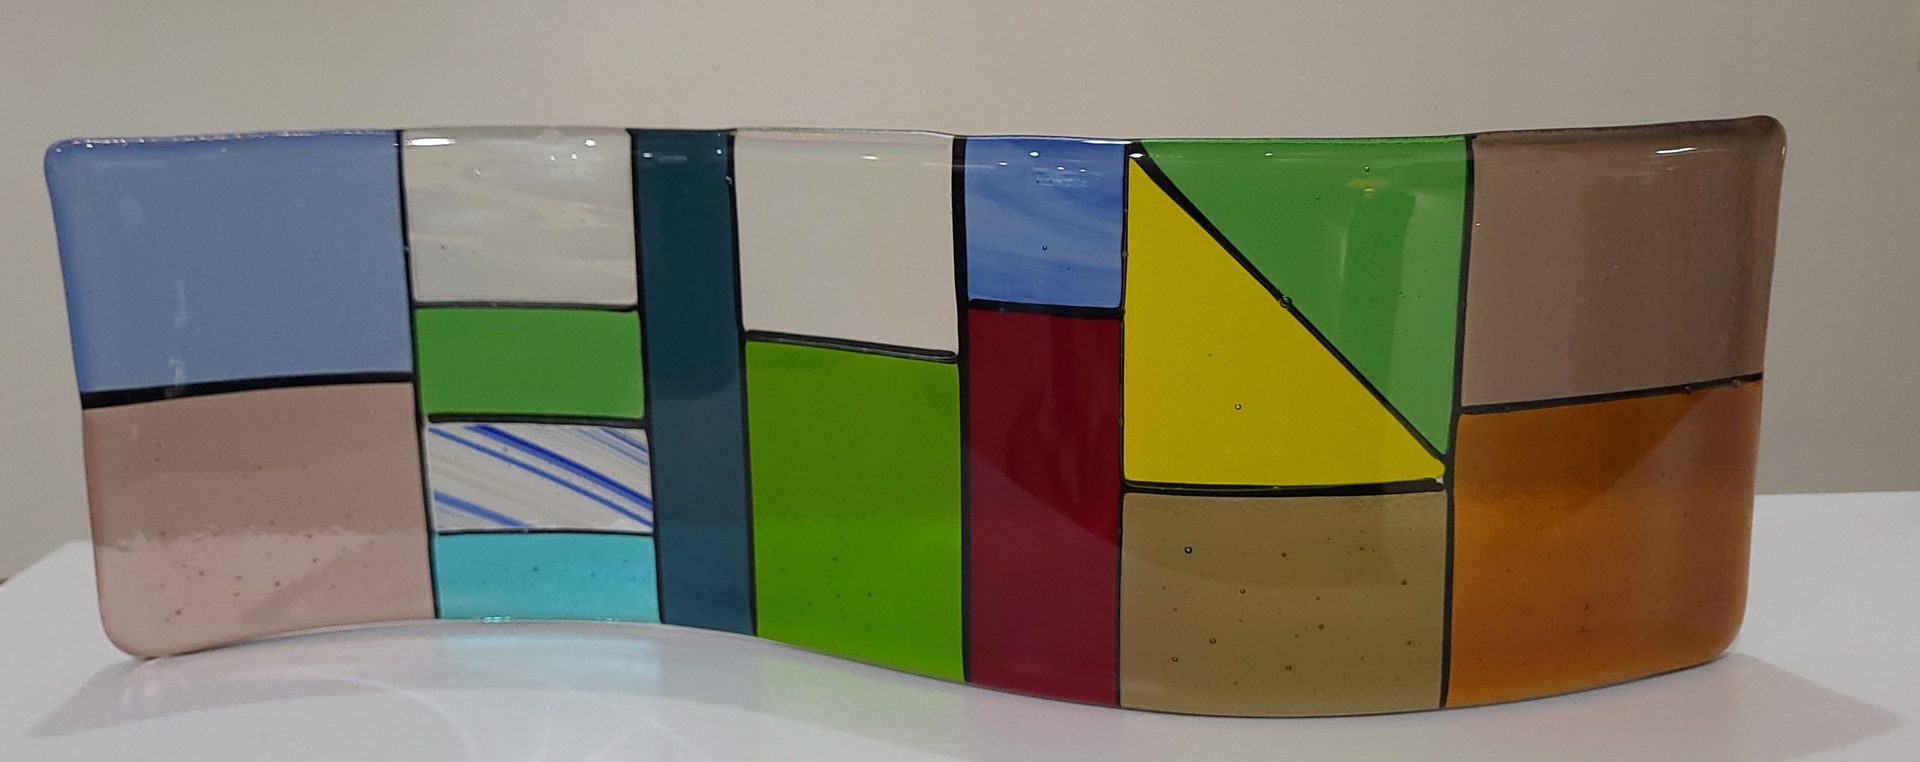 Sharon's Glass Palette - Fused Glass Art